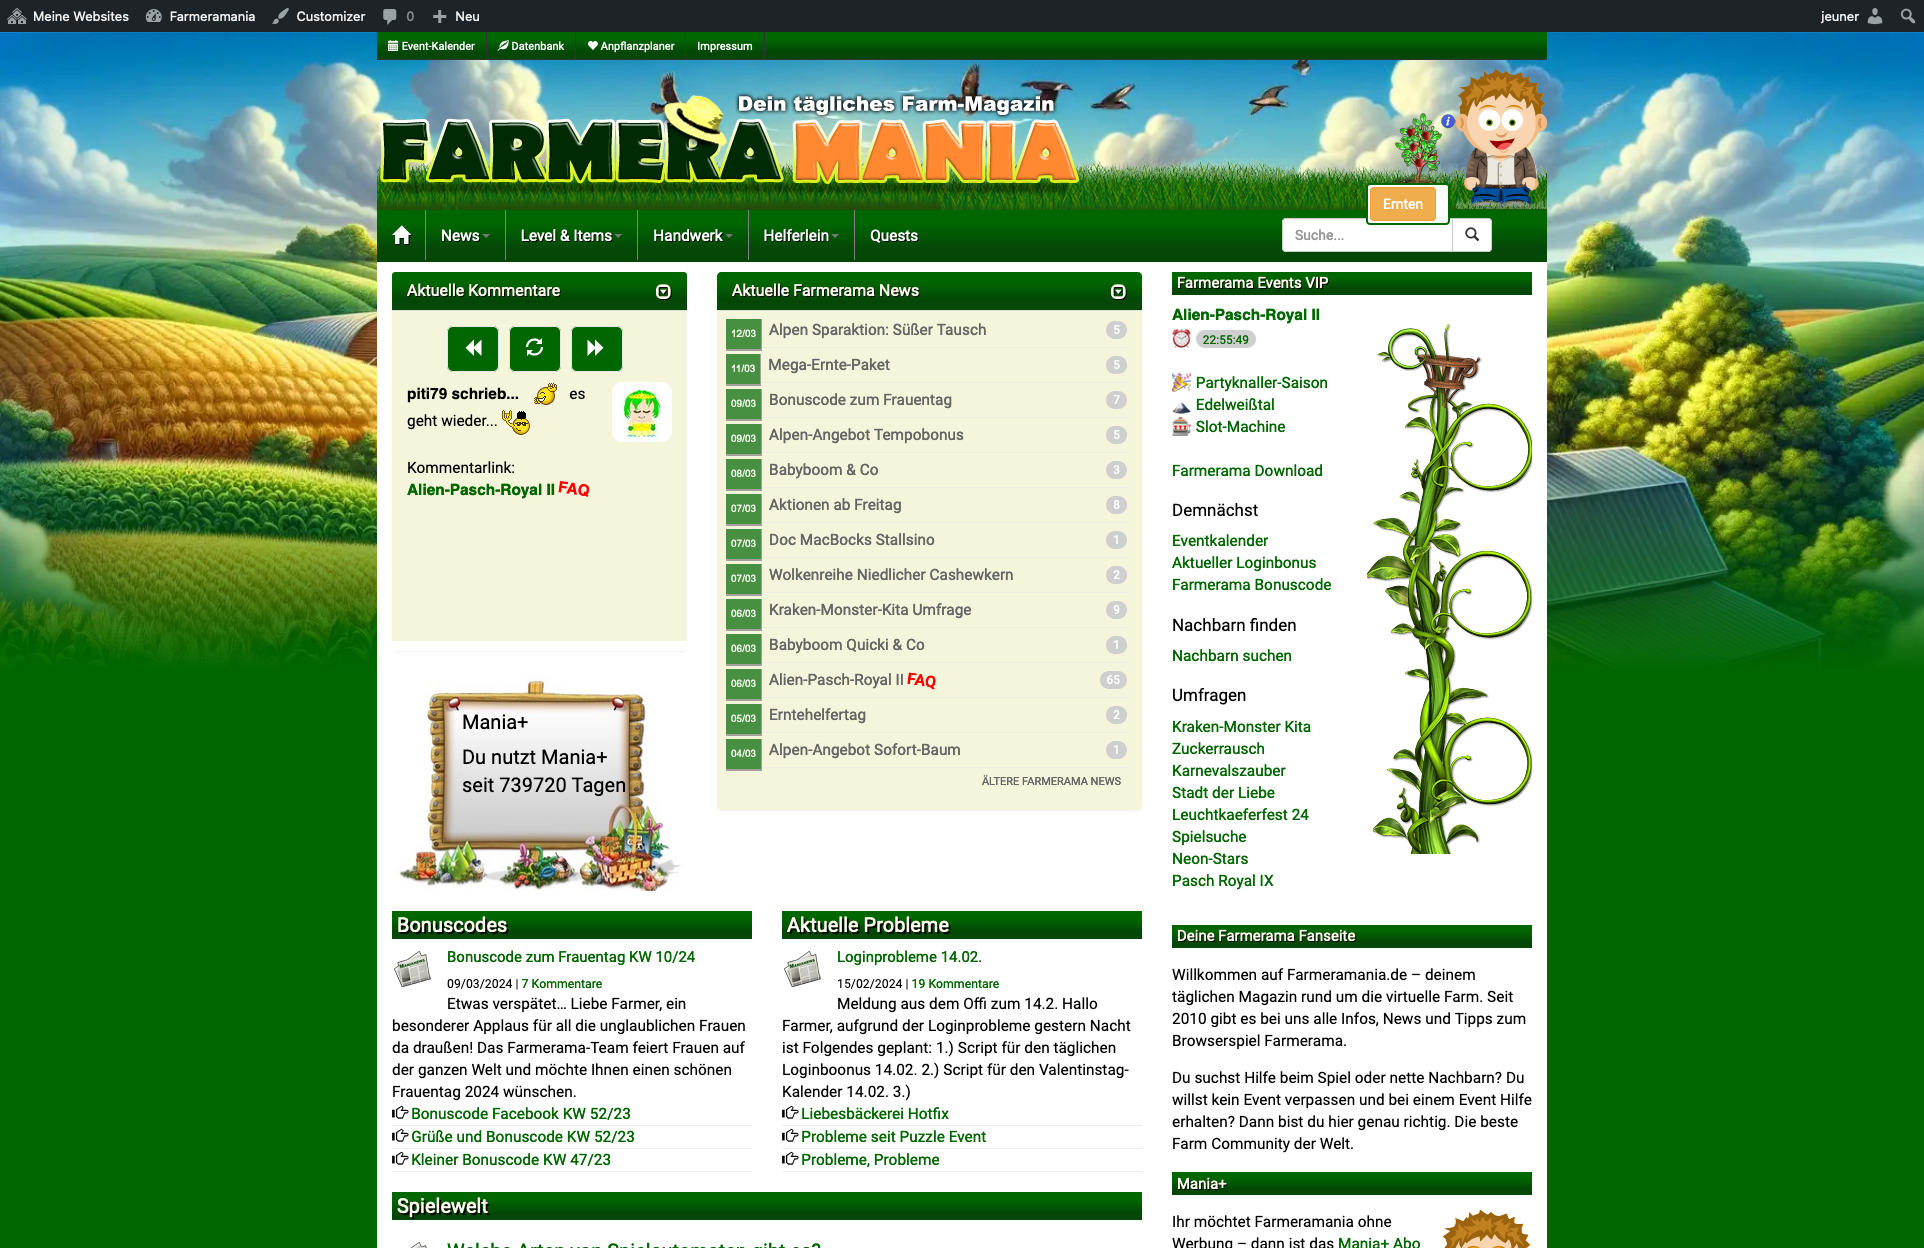 Image of Farmeramania a Fansite Project